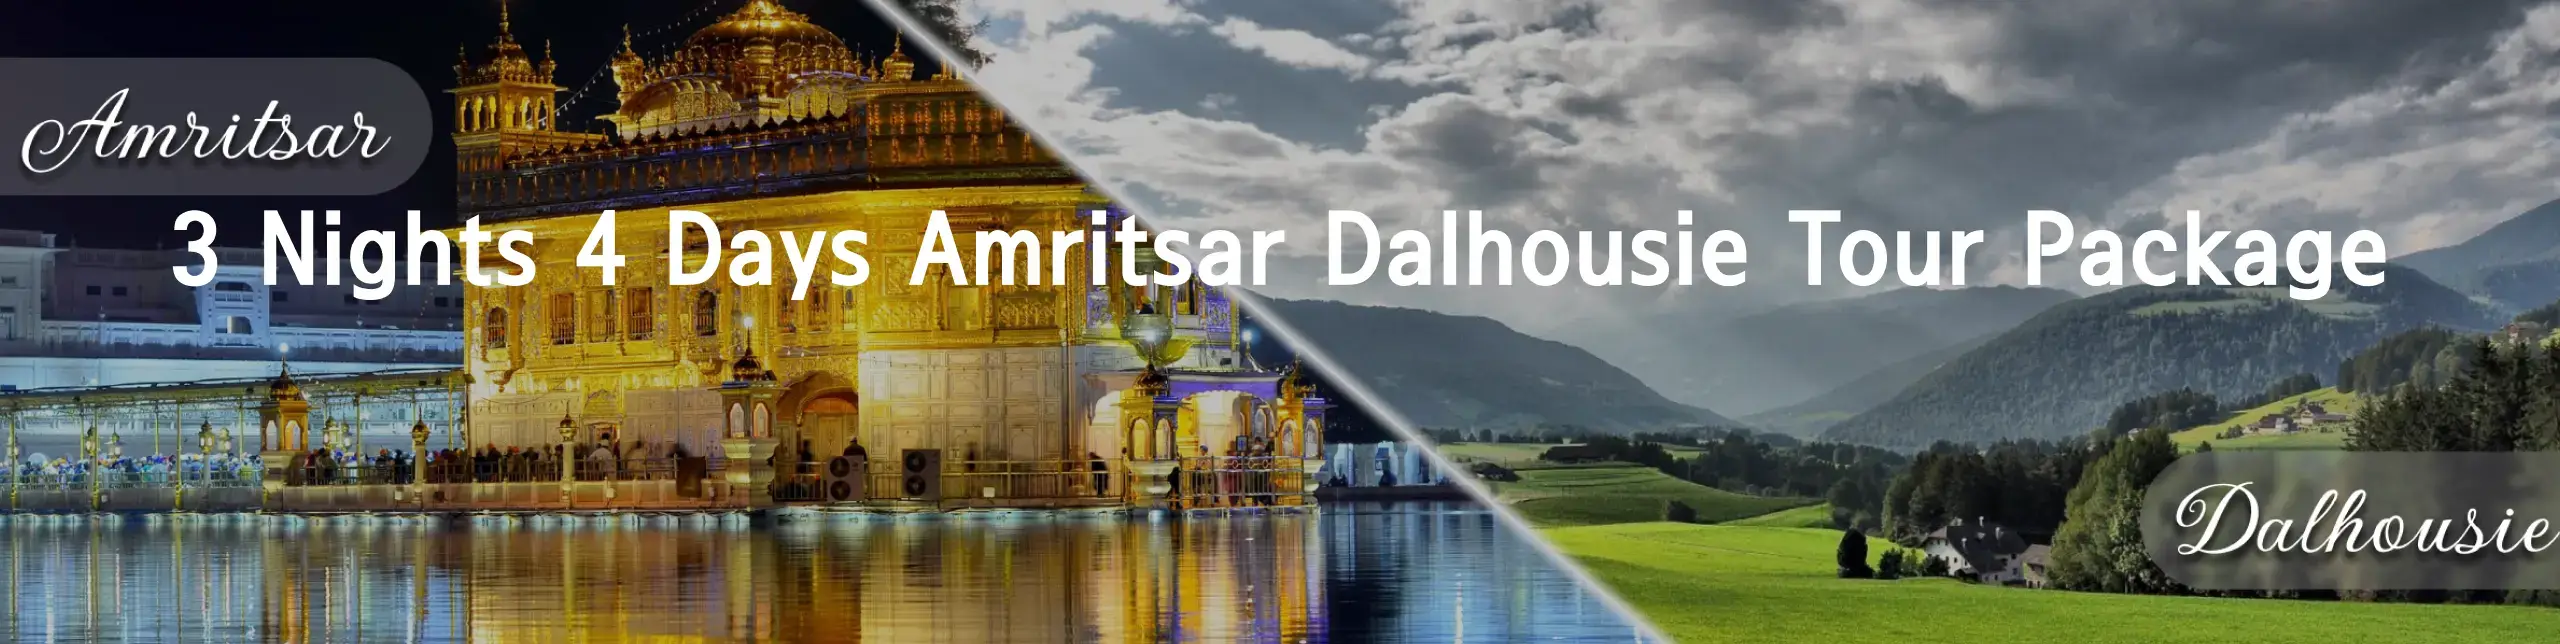 amritsar-dalhousie